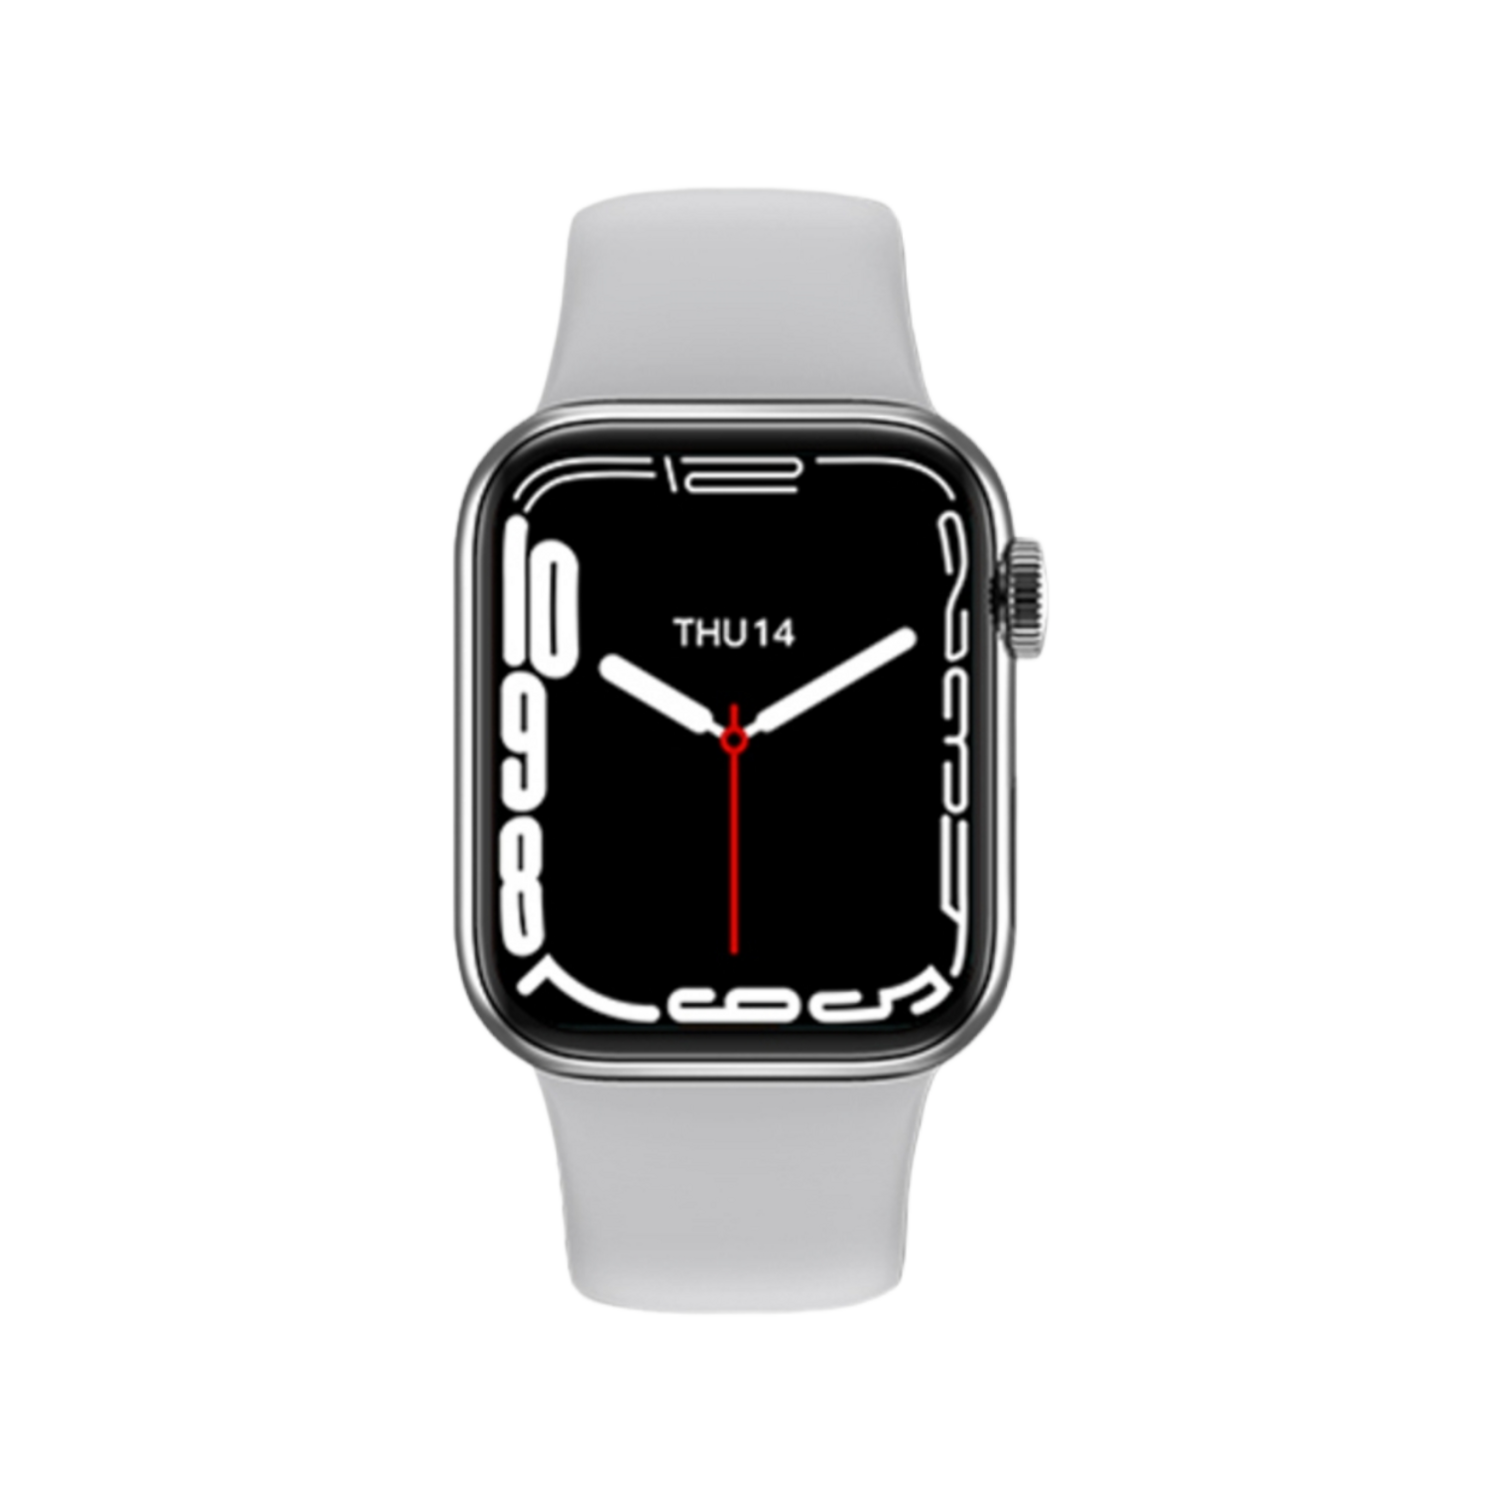 i7 smart watch 41mm ساعة ذكية